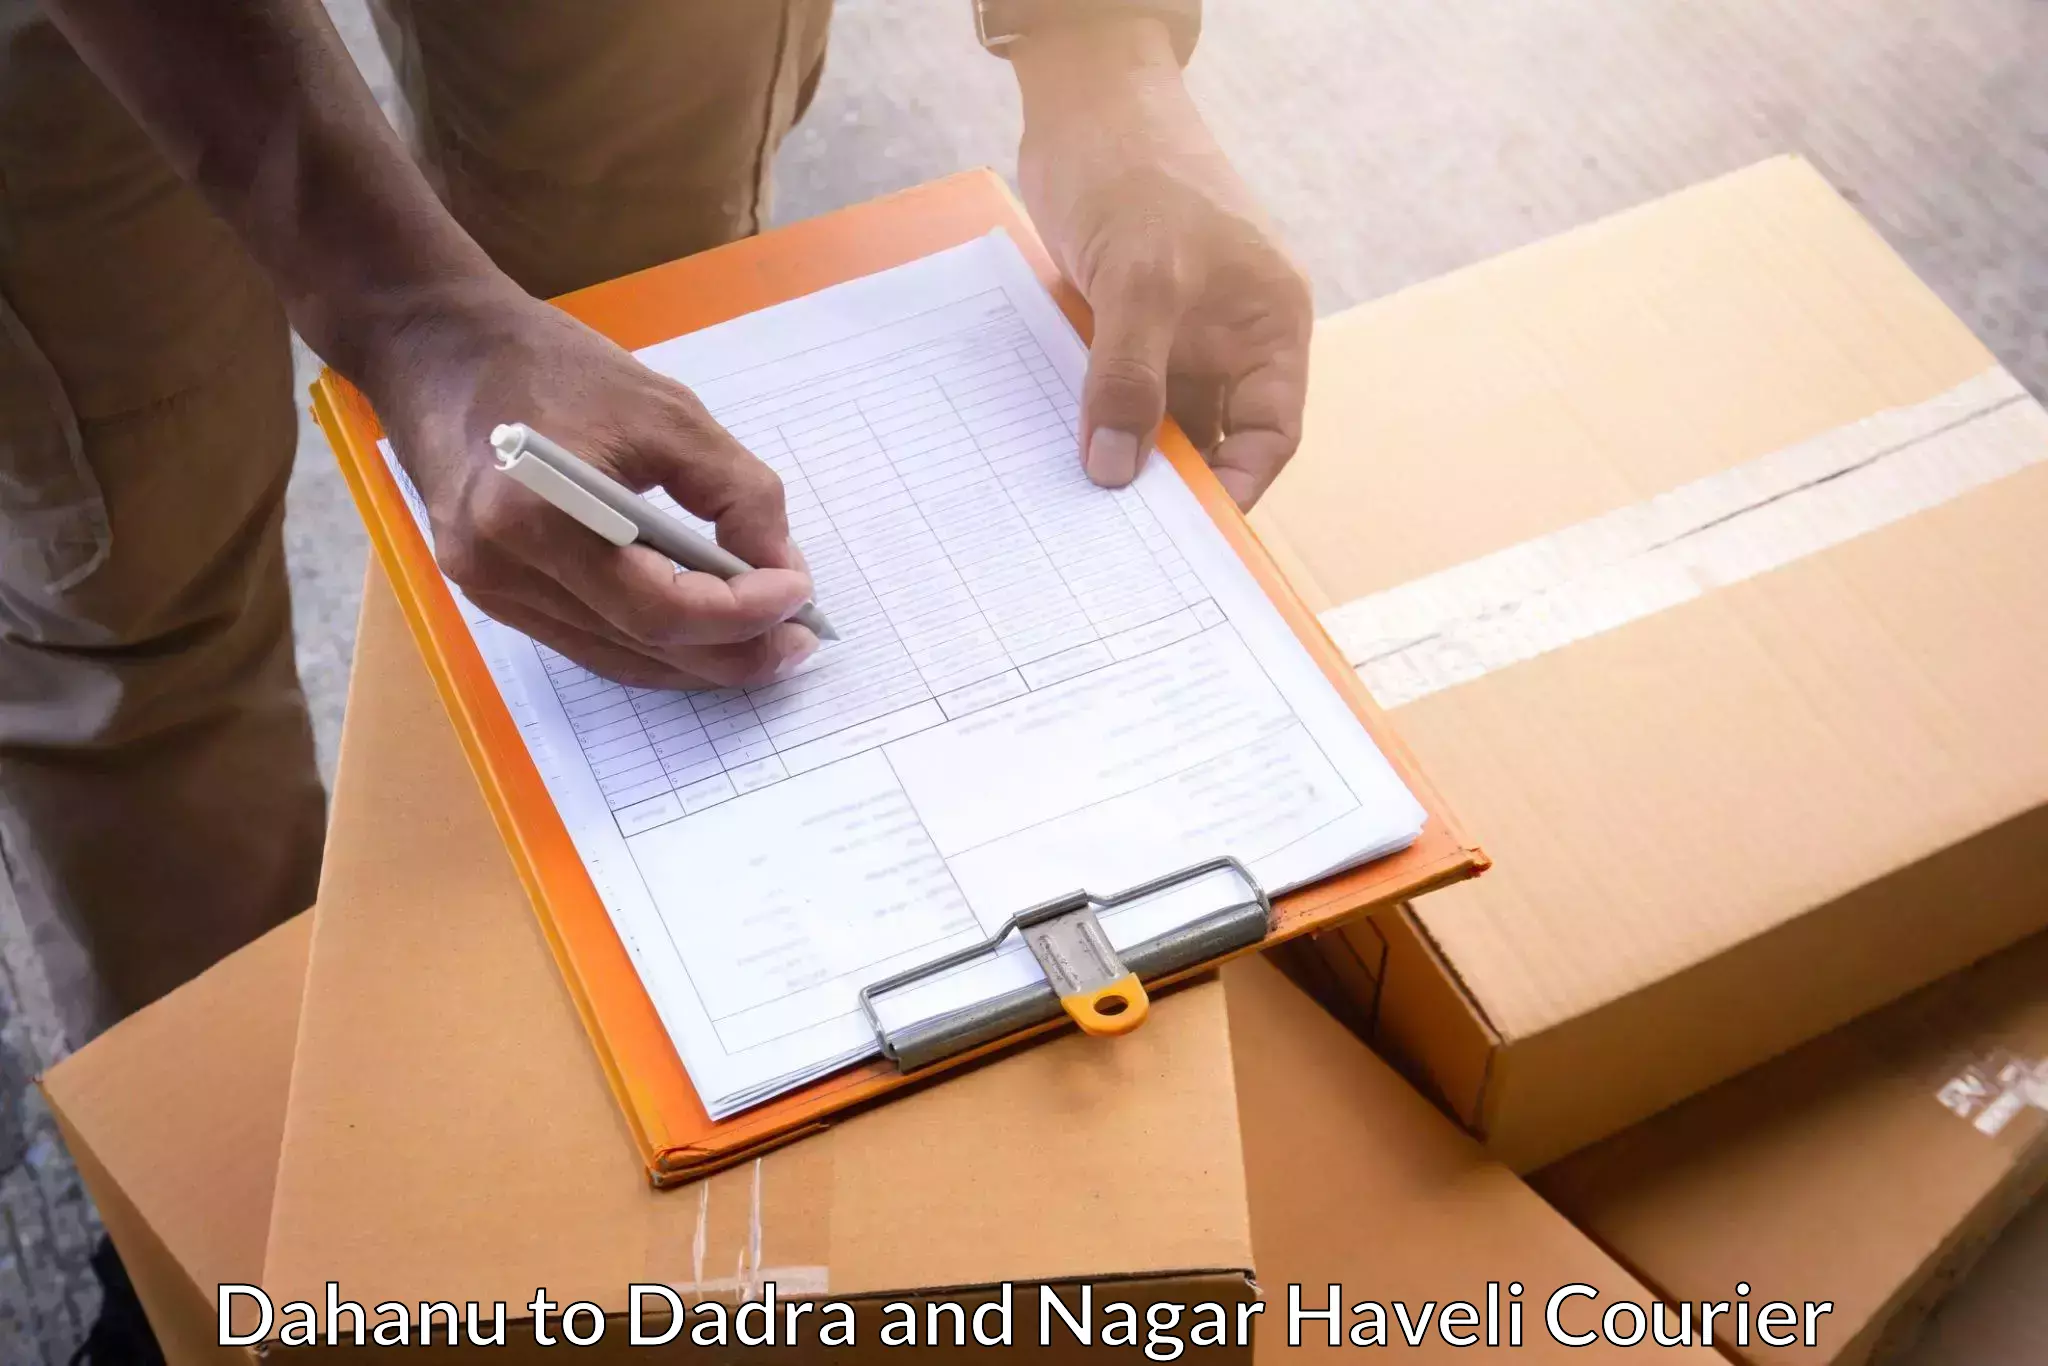 International parcel service Dahanu to Dadra and Nagar Haveli